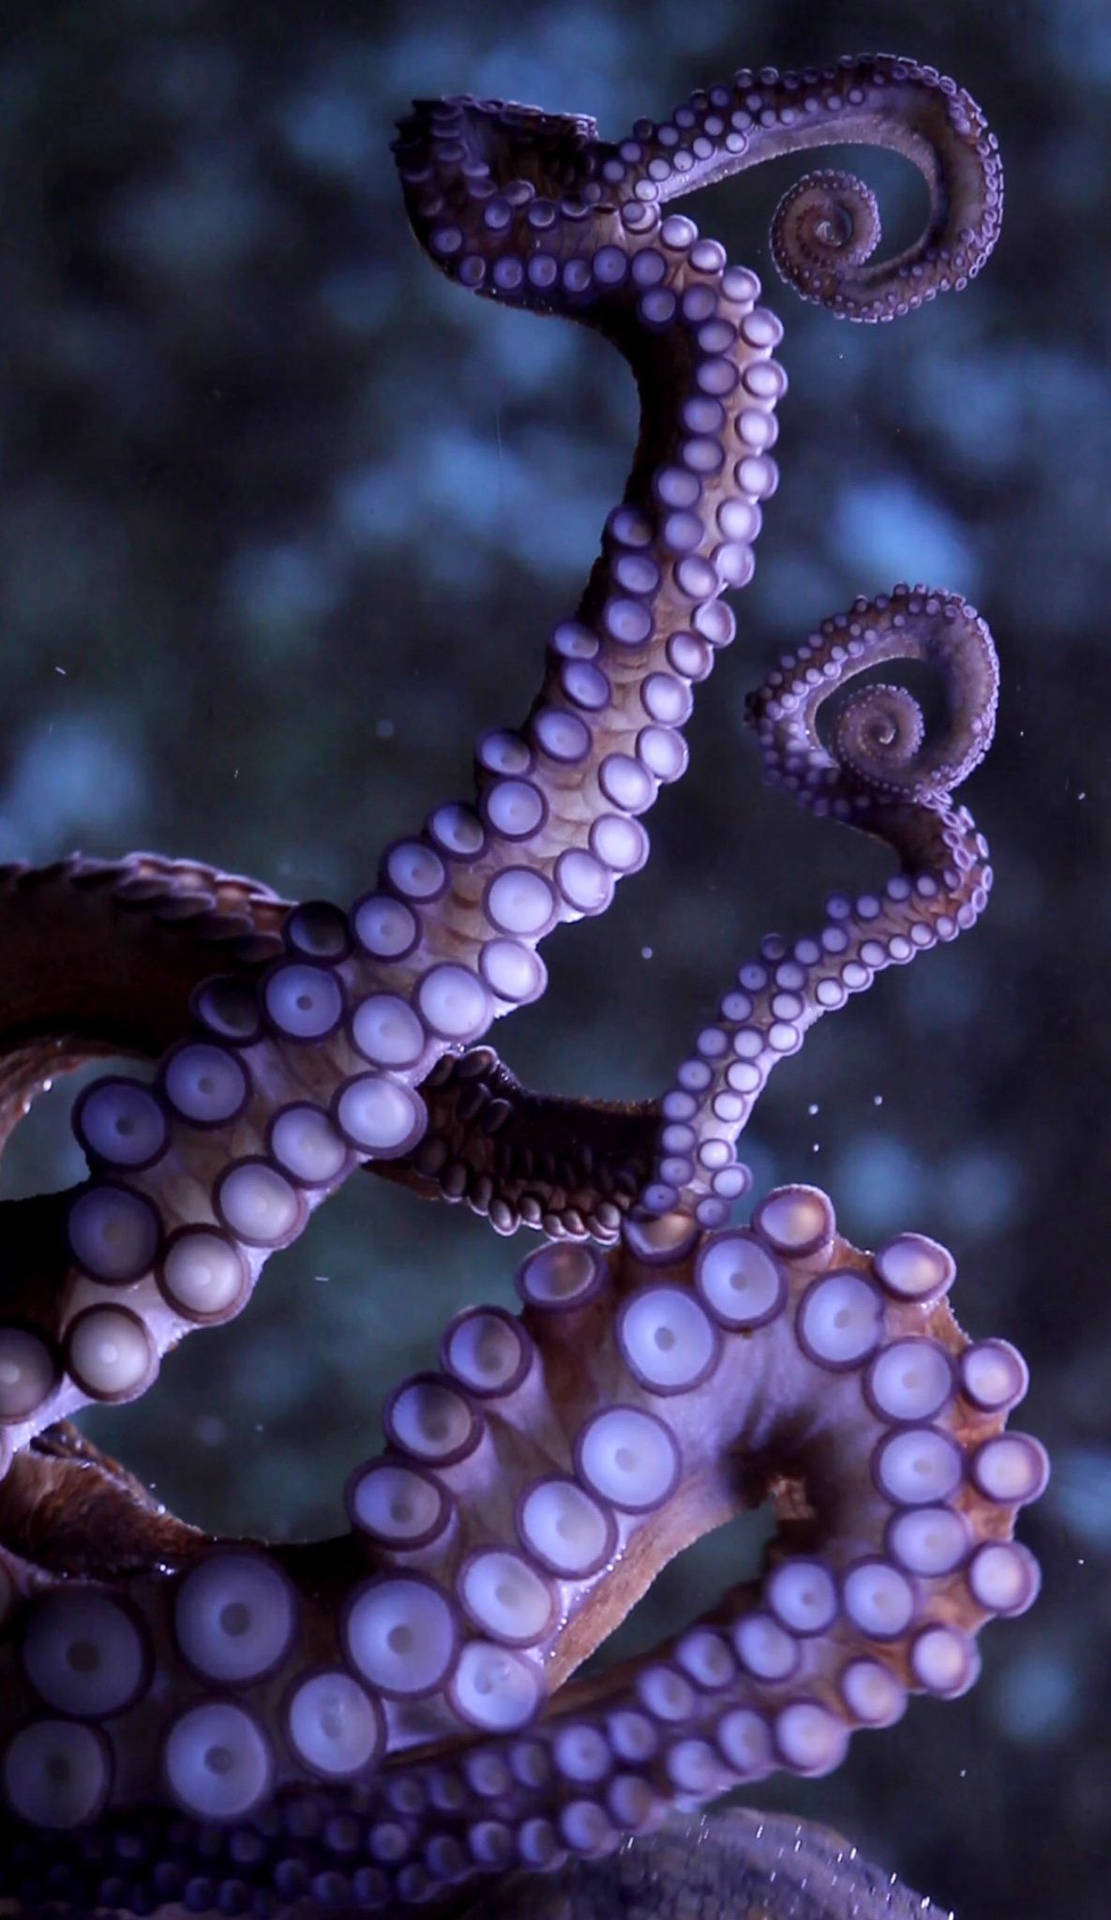 Live Octopus Tentacles